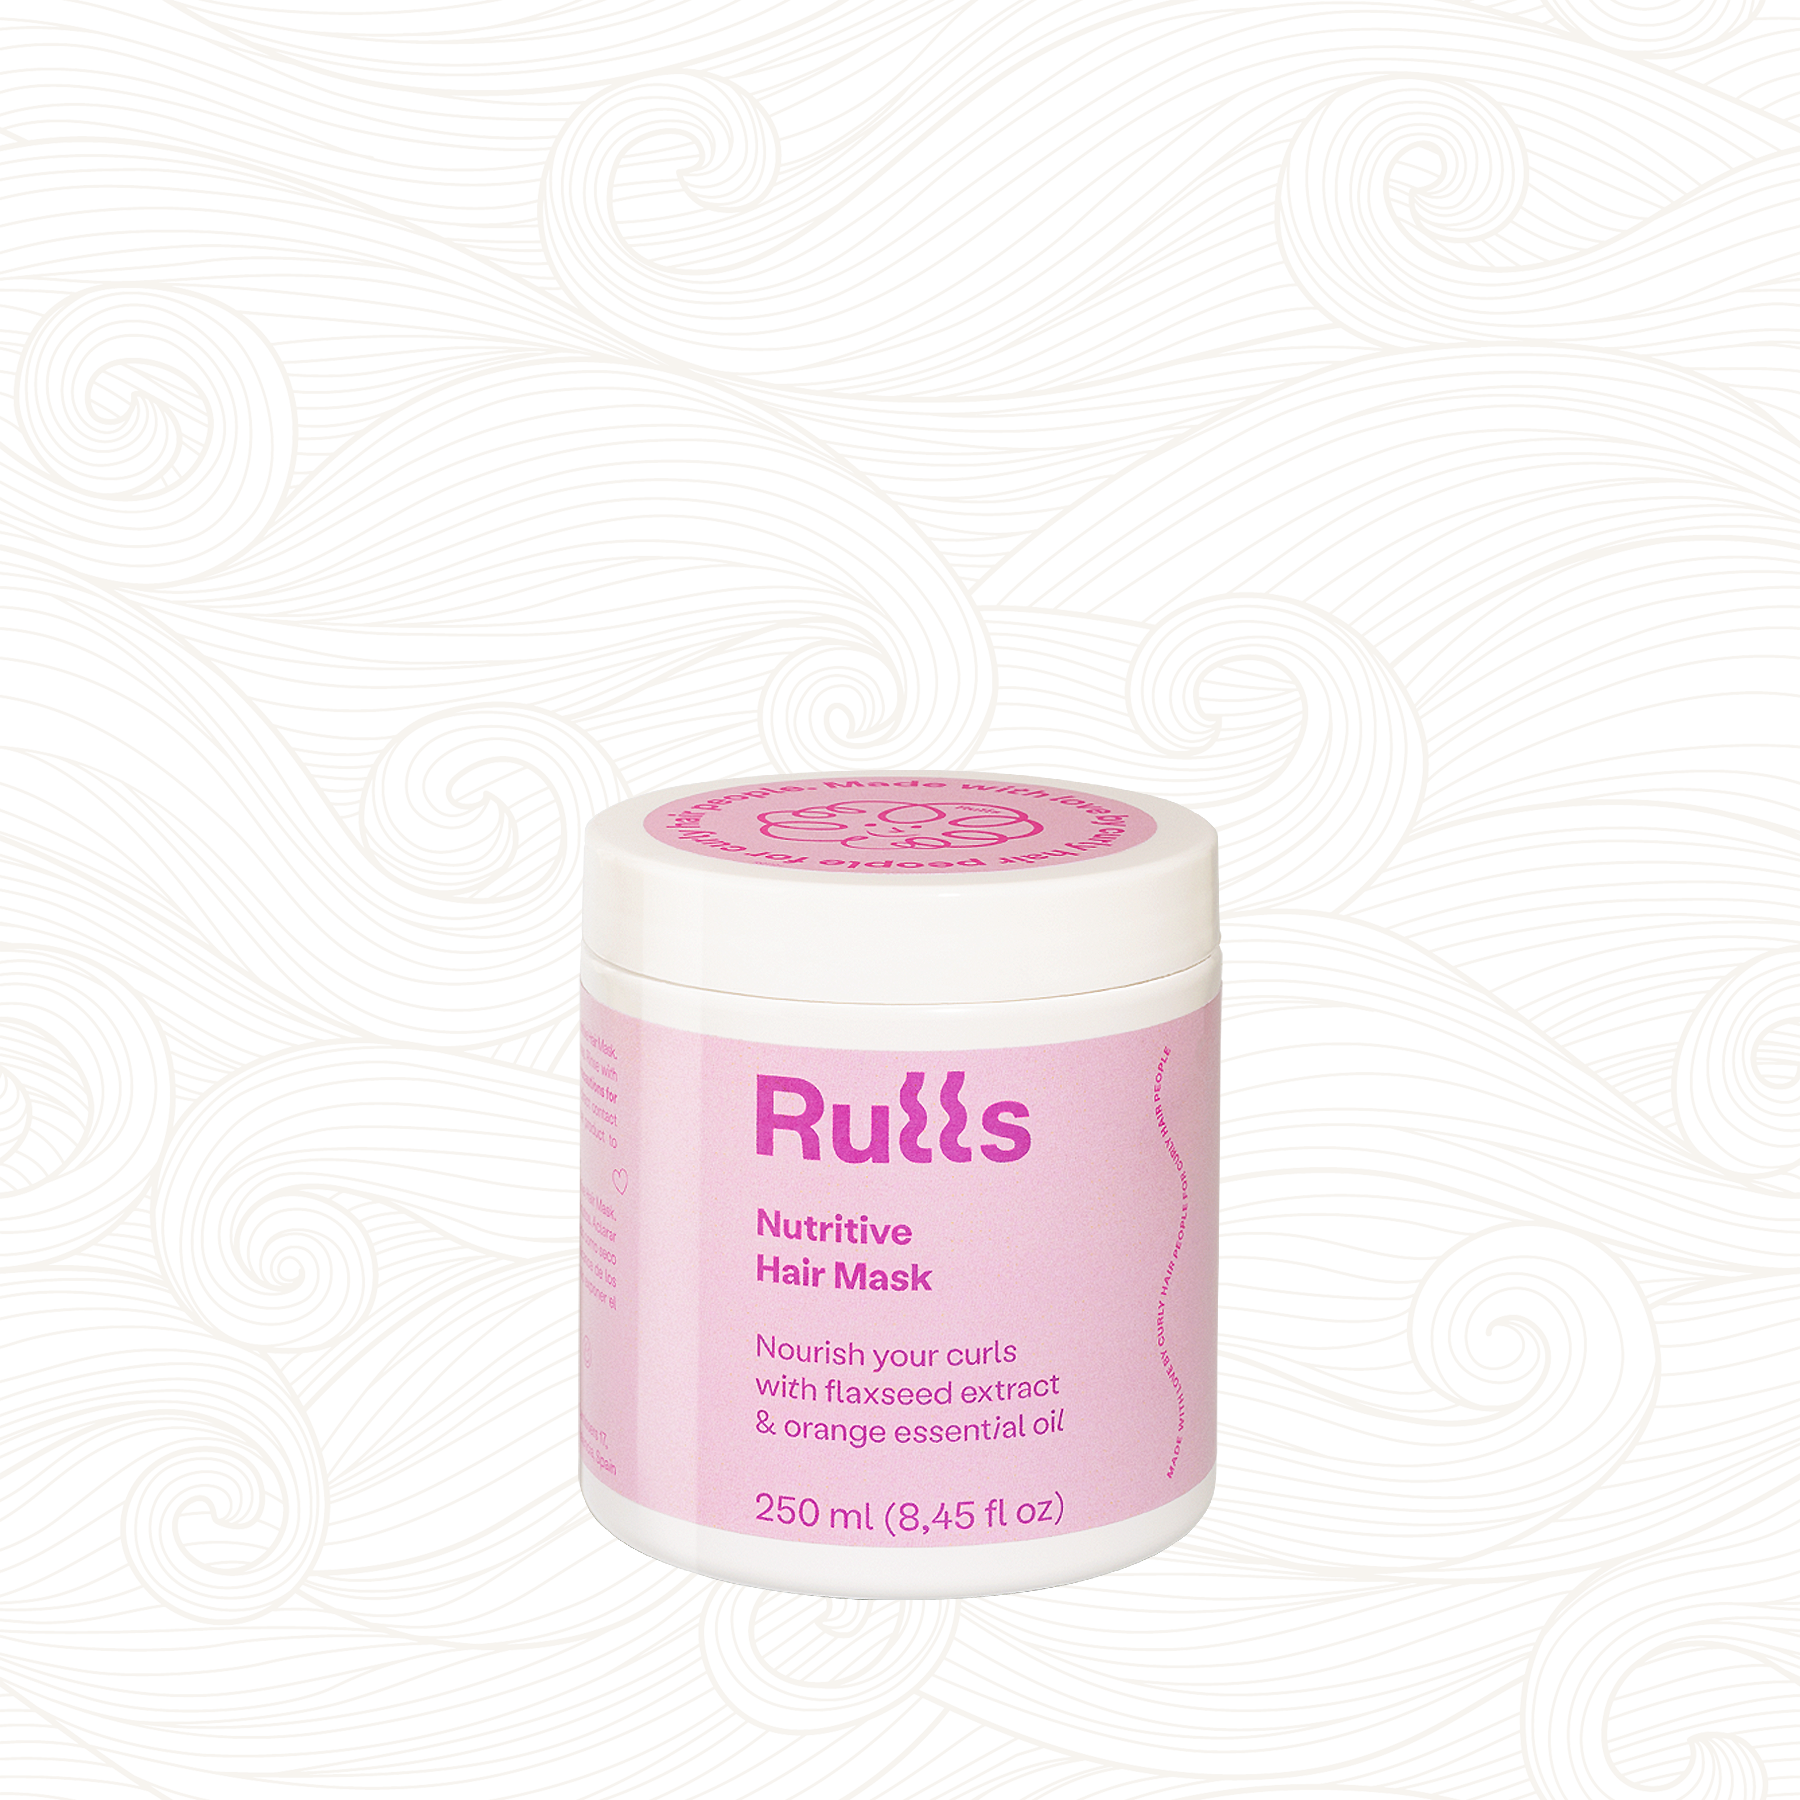 Rulls | Nutritive Hair Mask /250ml Haarmaske Rulls